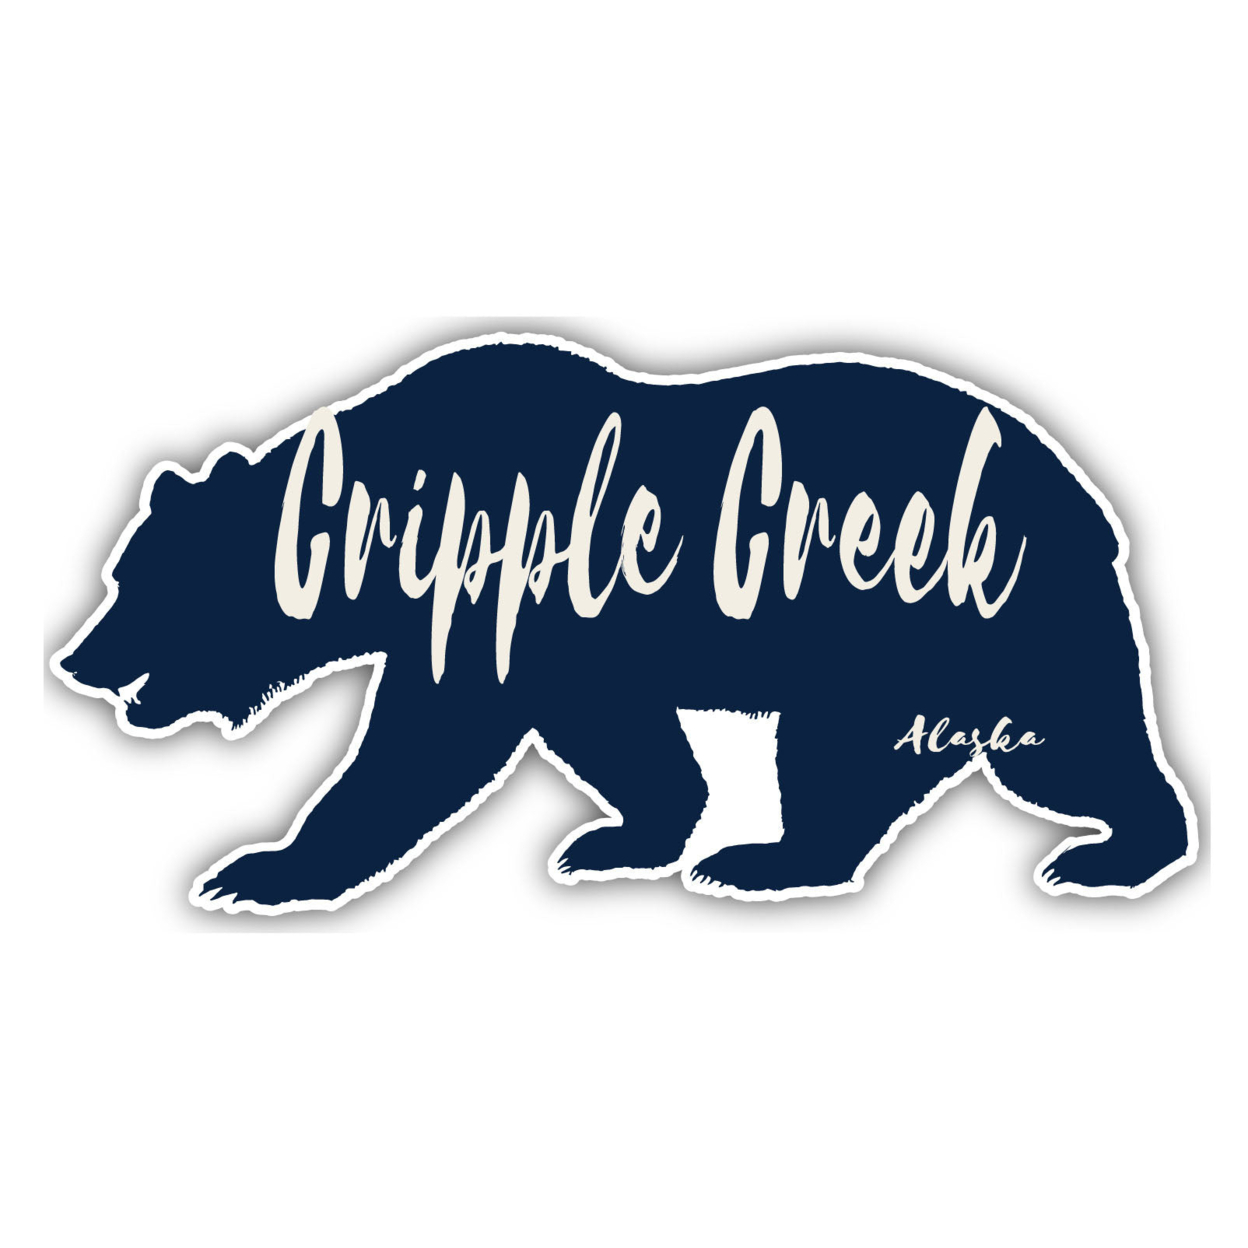 Cripple Creek Alaska Souvenir Decorative Stickers (Choose Theme And Size) - 4-Pack, 8-Inch, Bear